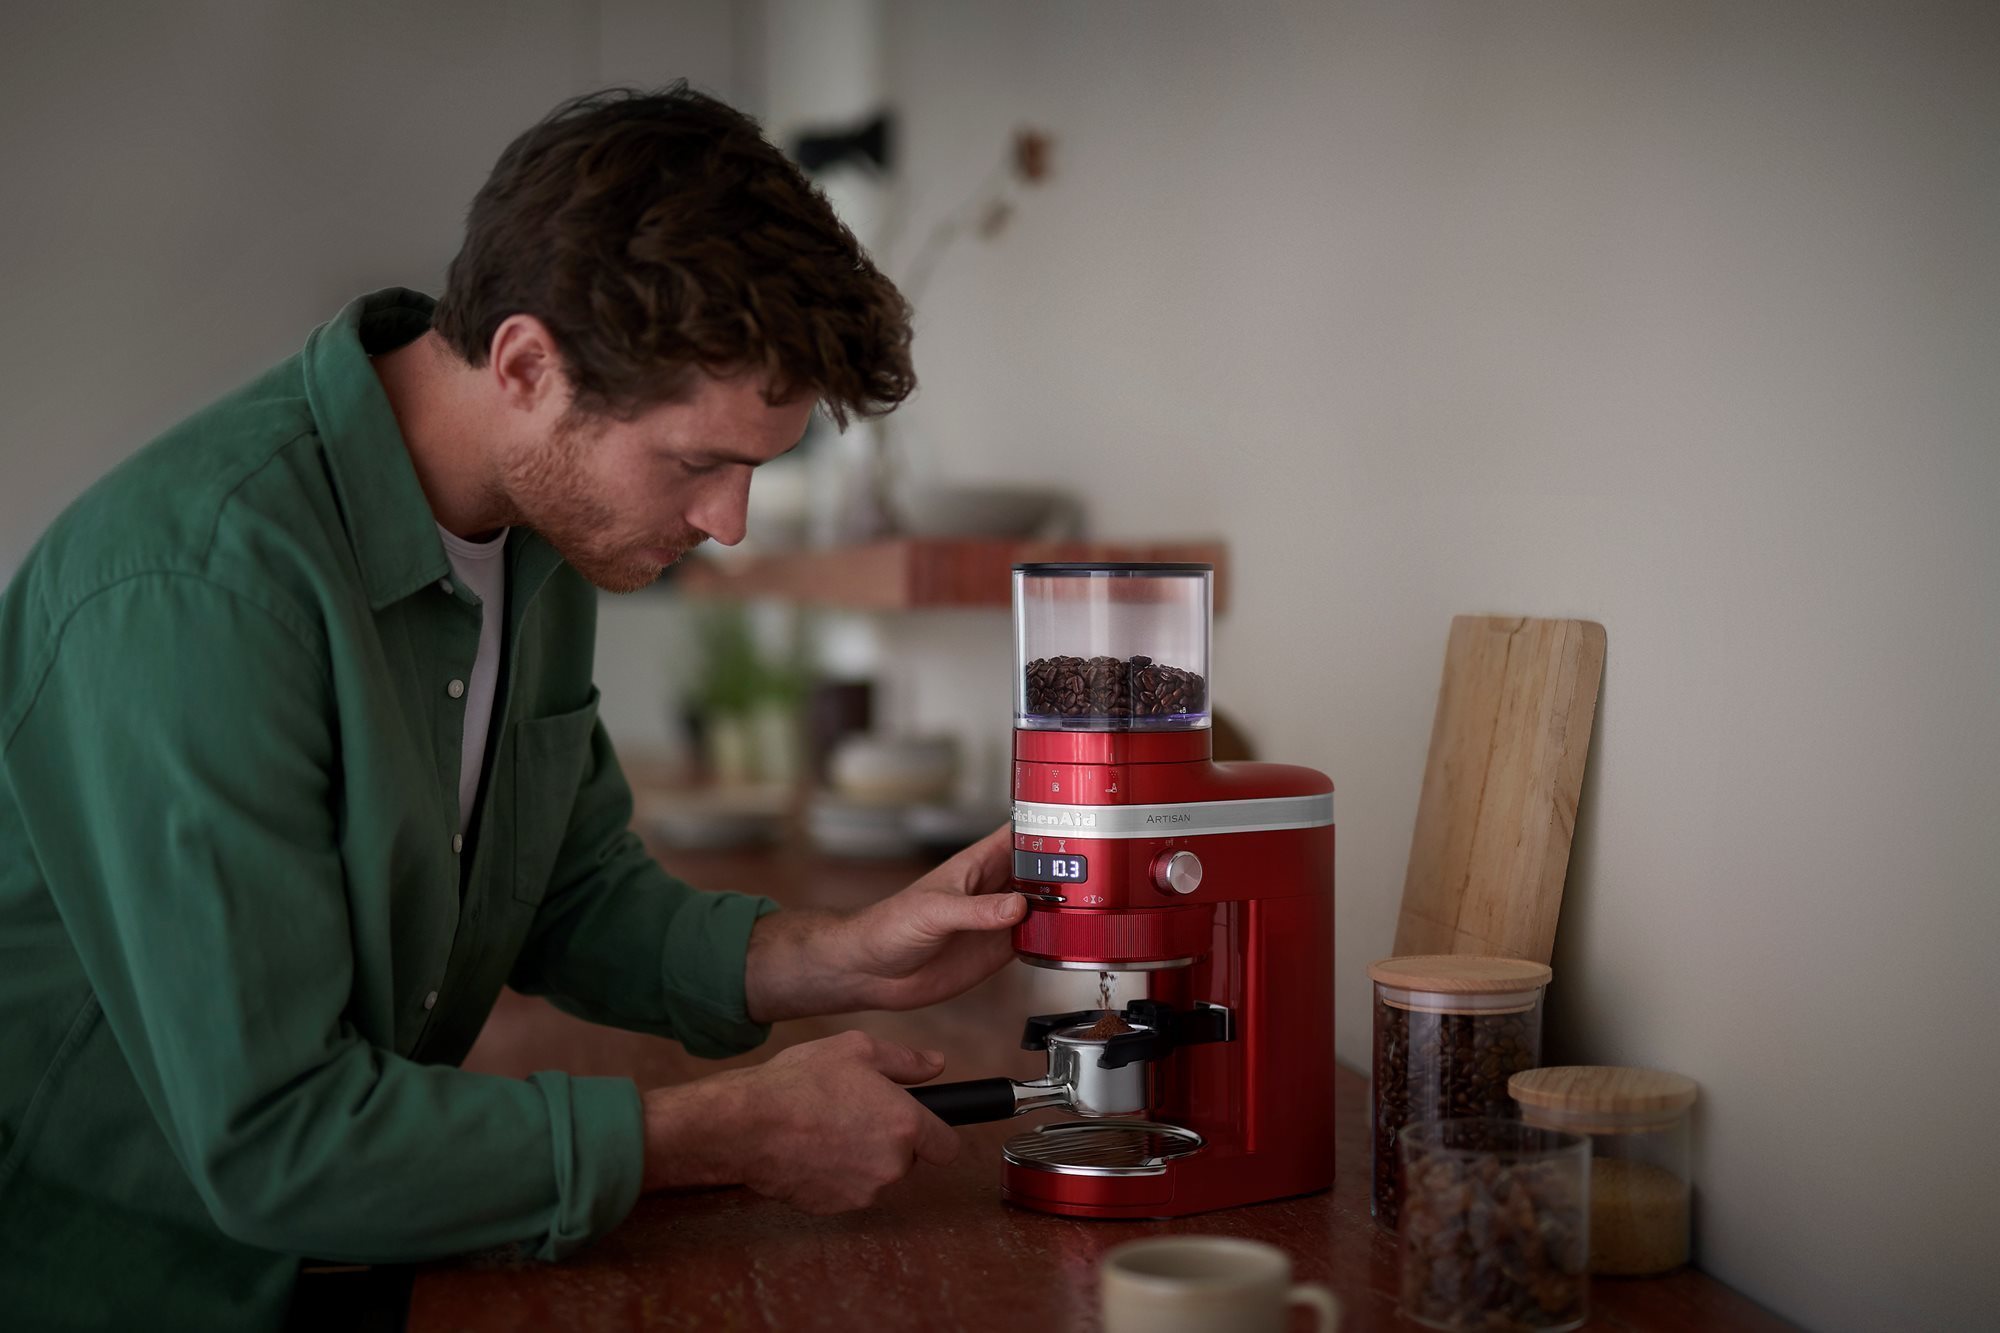 Electric coffee grinder, Artisan, Candy Apple - KitchenAid